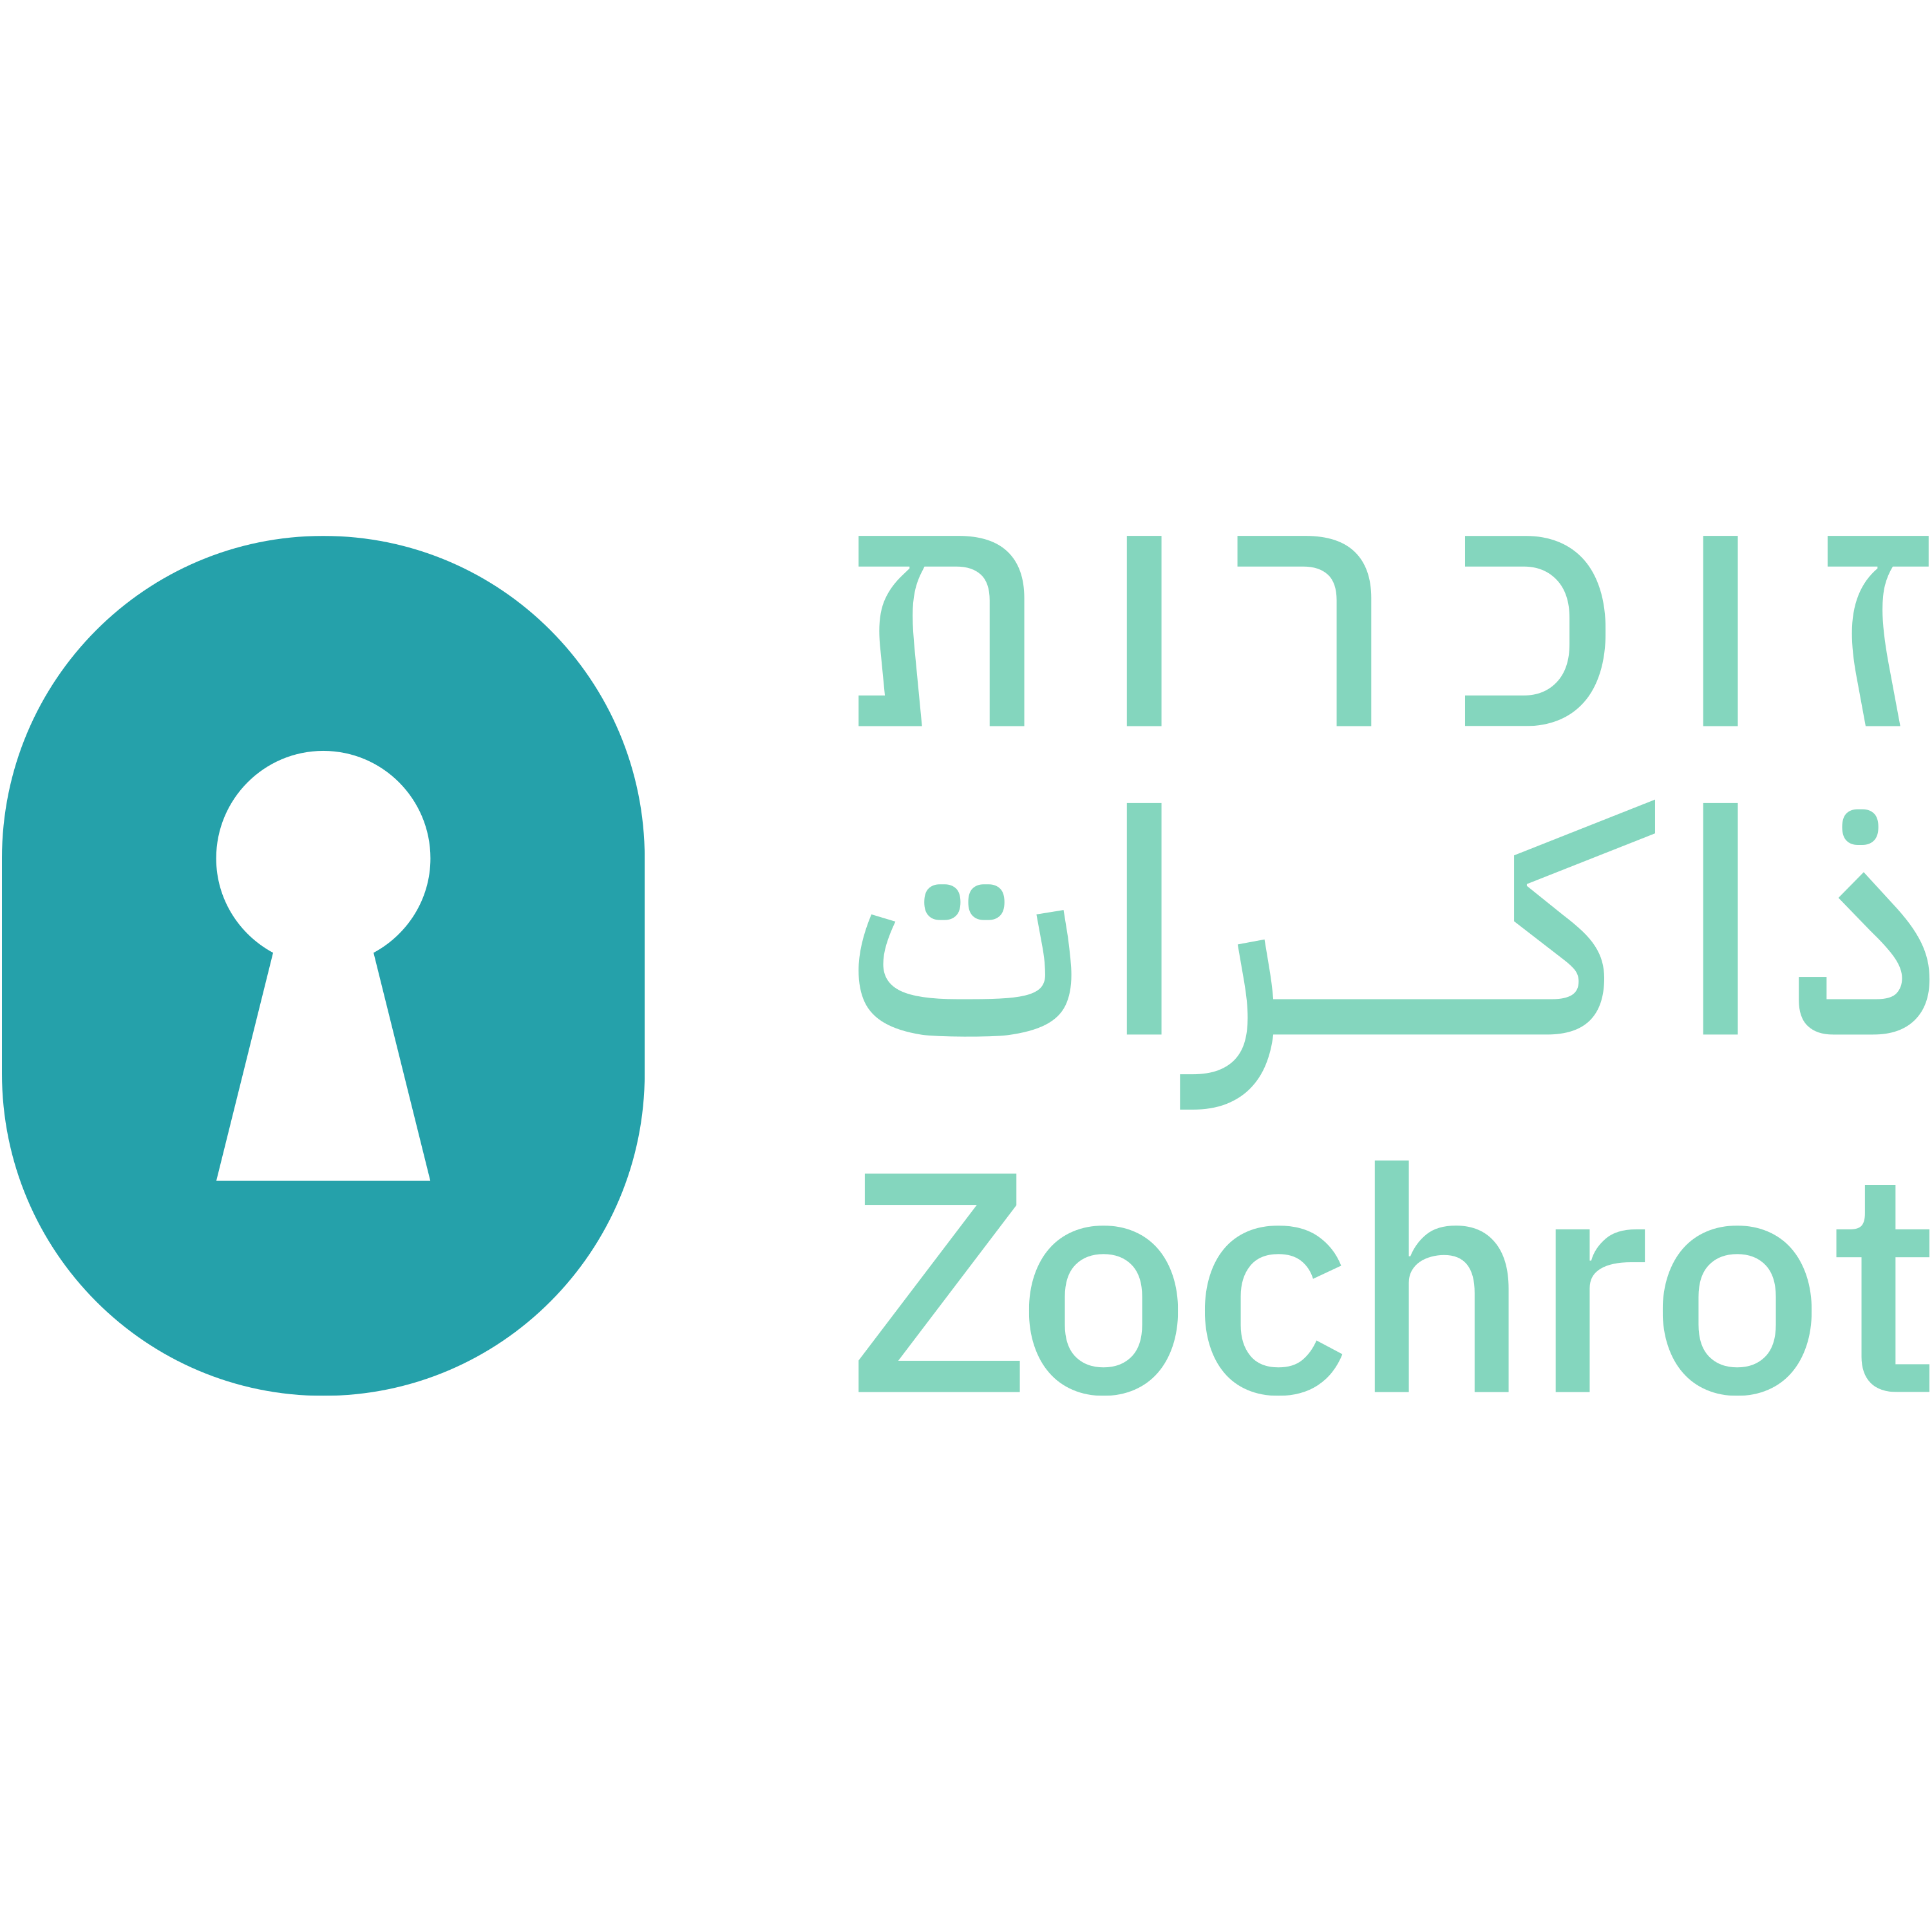 Zochrot Logo Transparent Picture